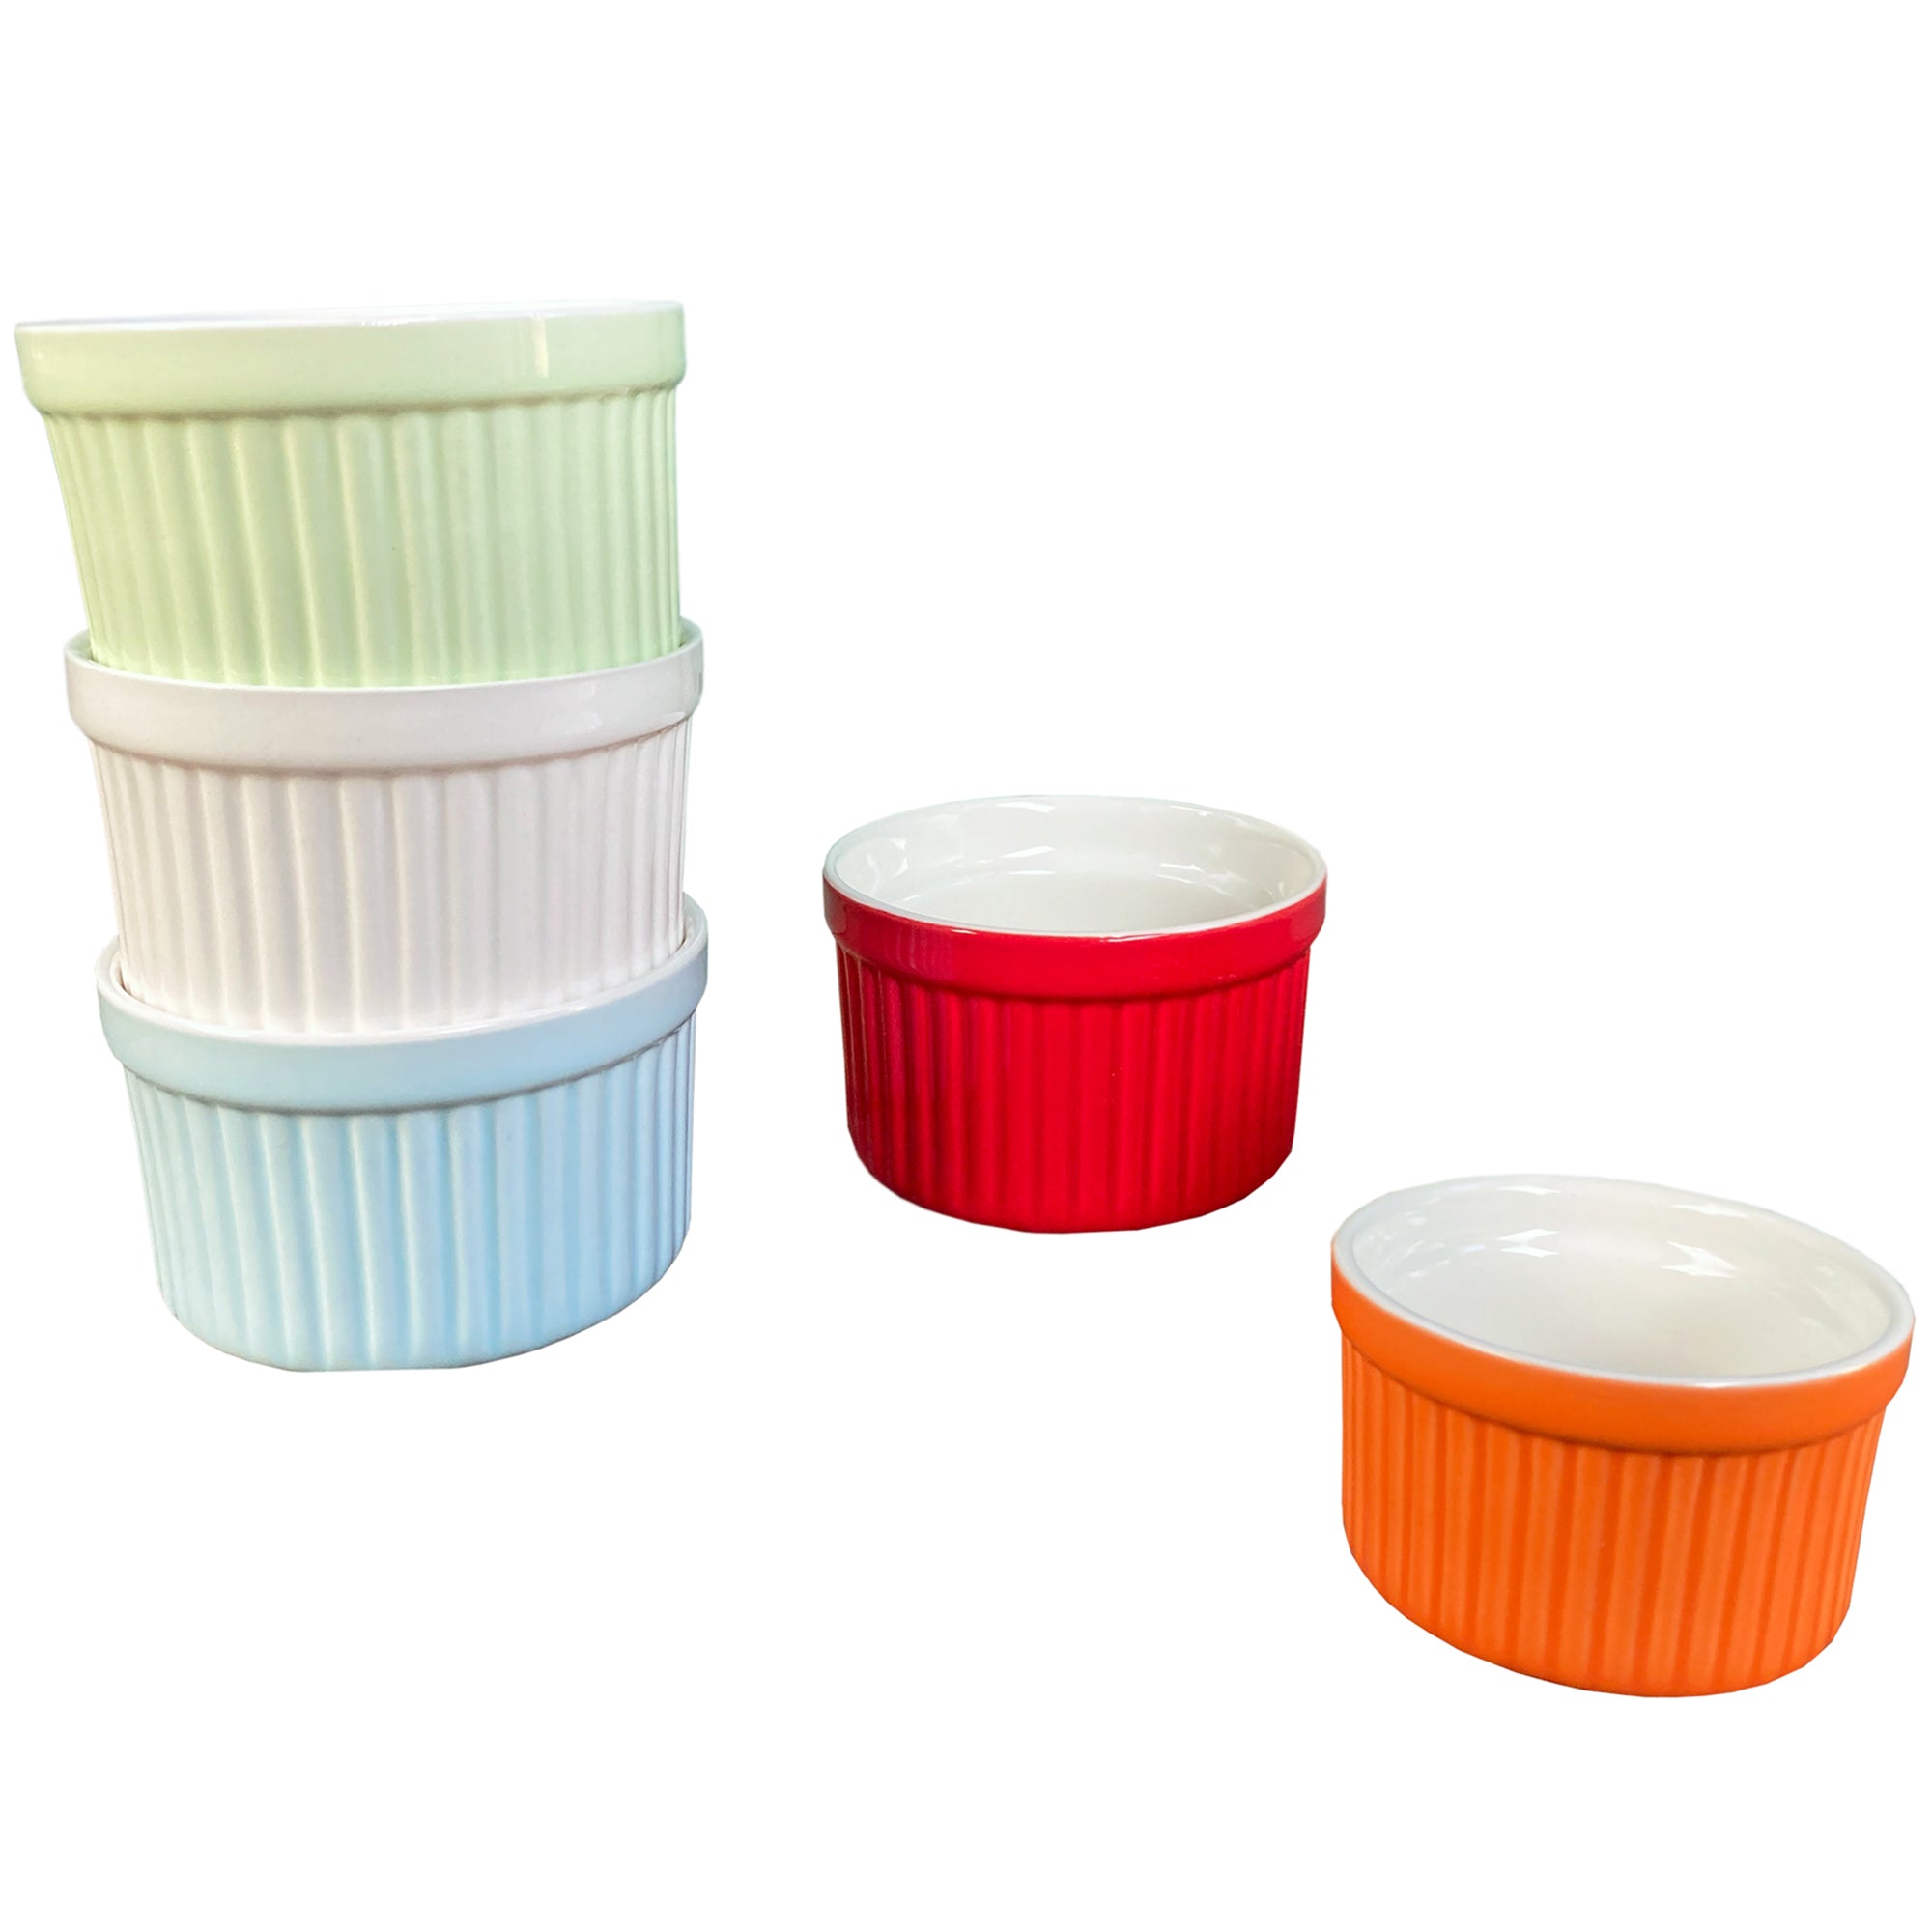 5 Ceramic Ramekin Dishes - Mixed Colours